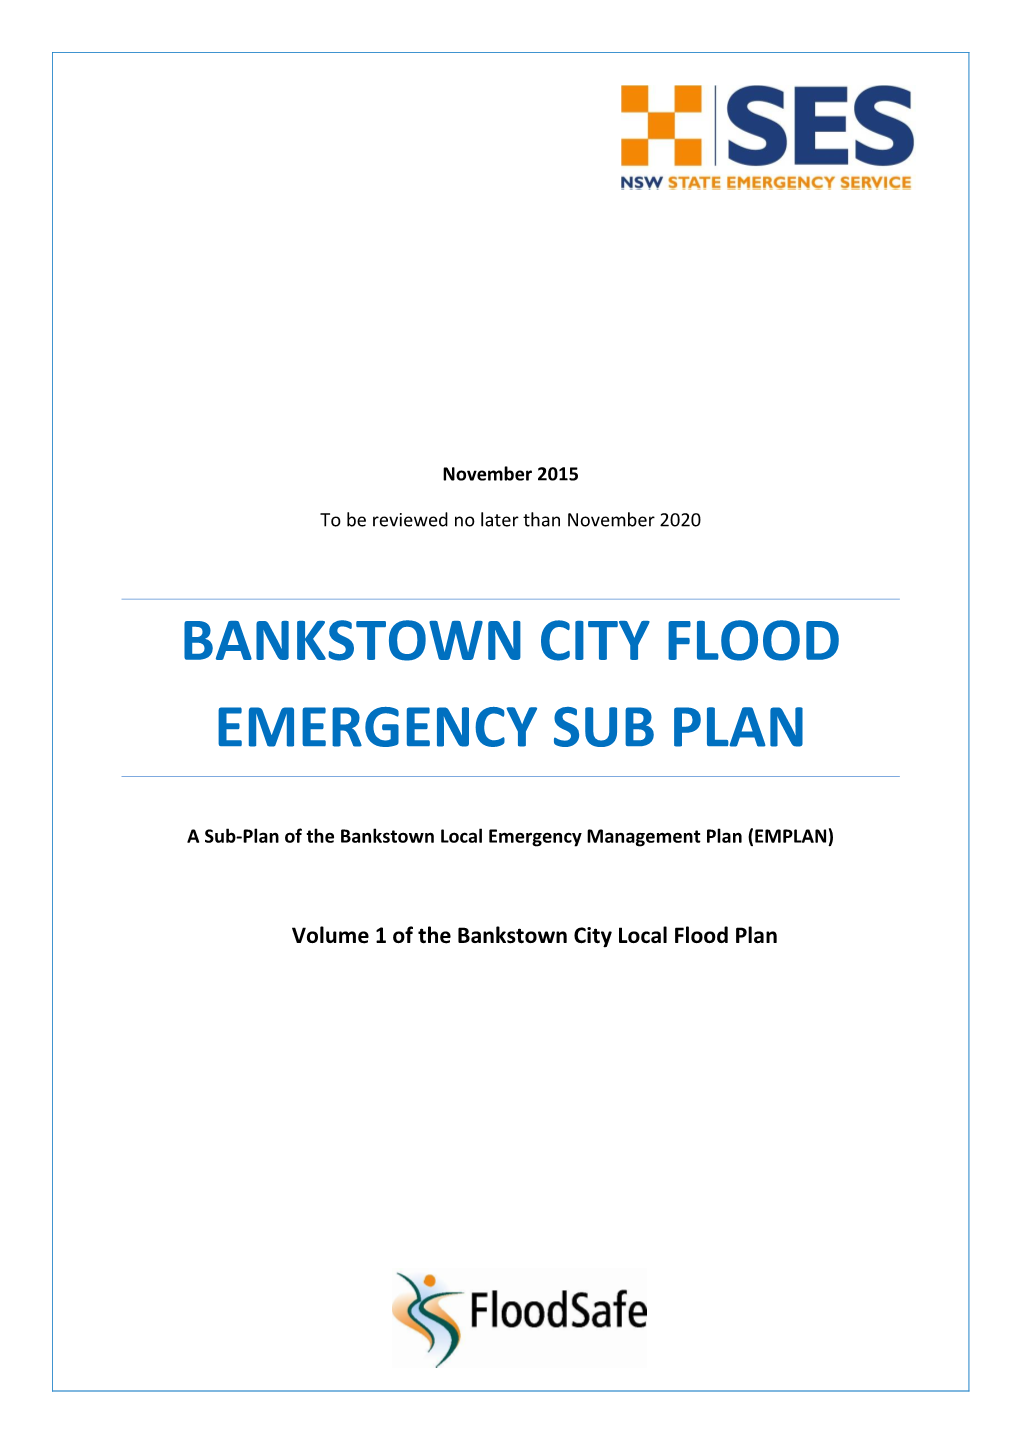 Bankstown City Flood Emergency Sub Plan